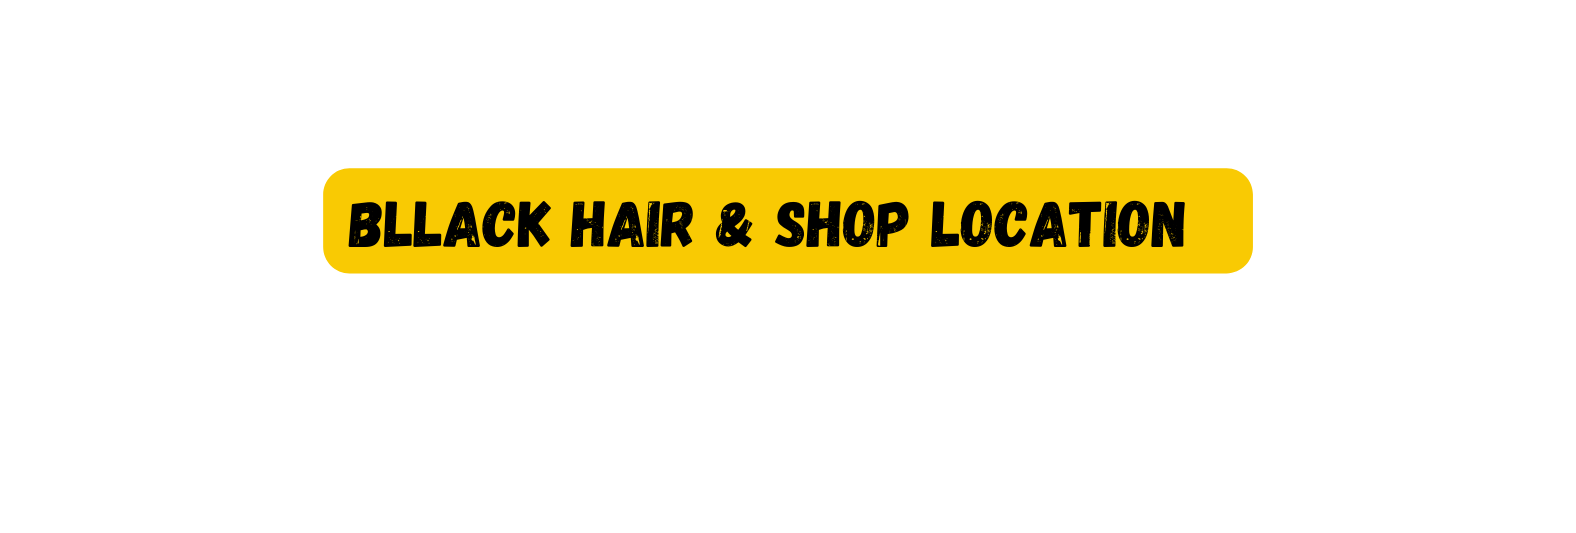 Bllack Hair Shop Location